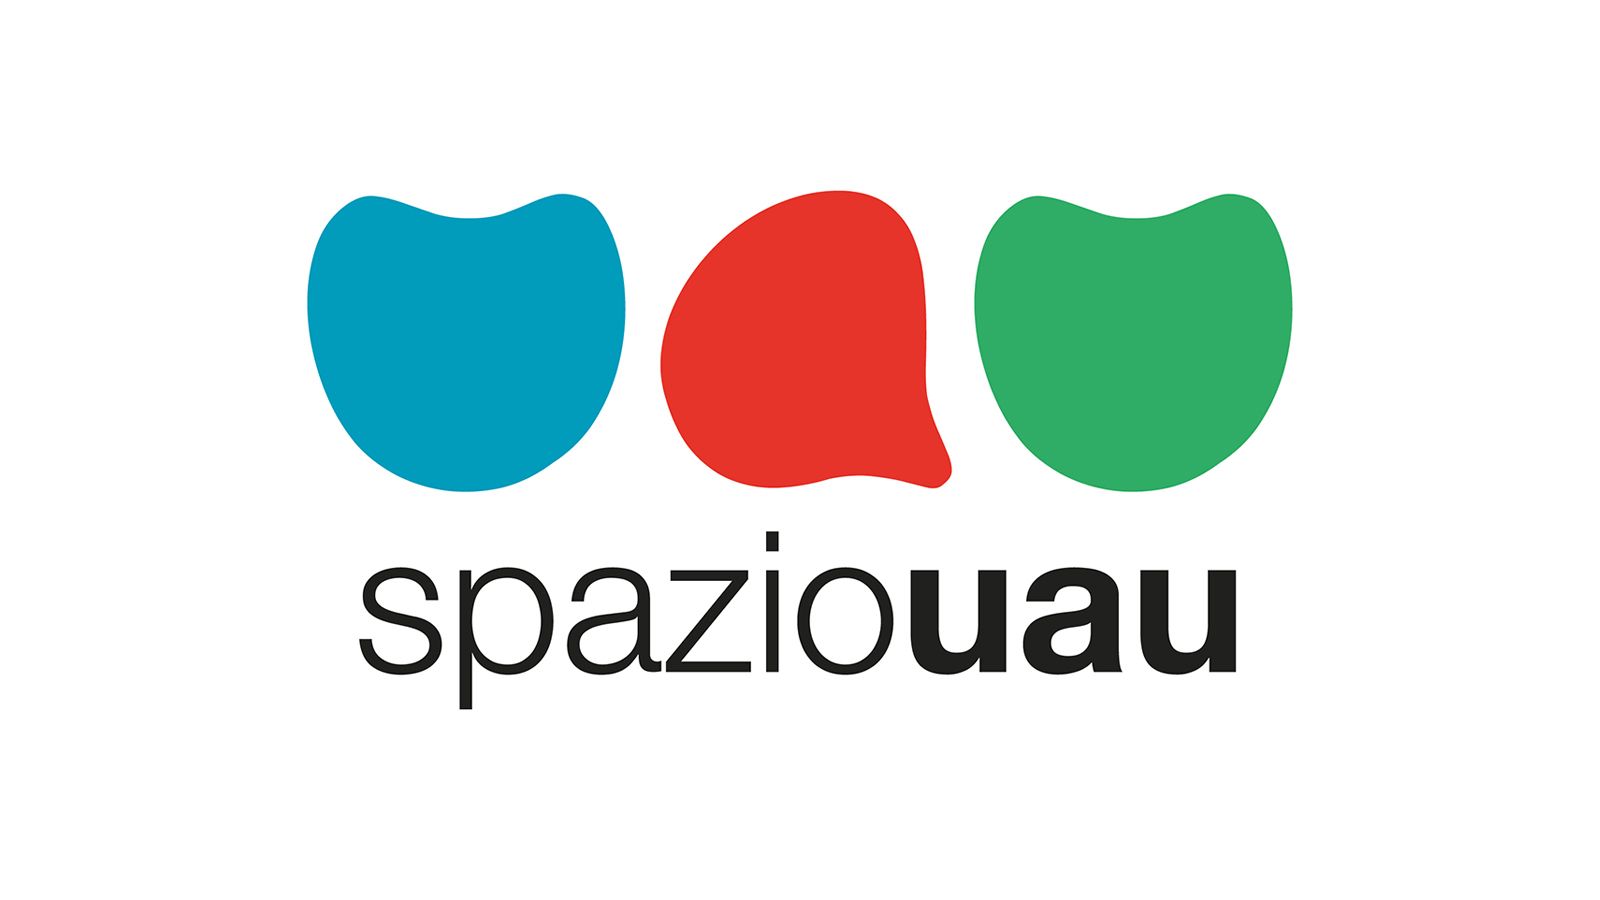 (c) Spaziouau.it